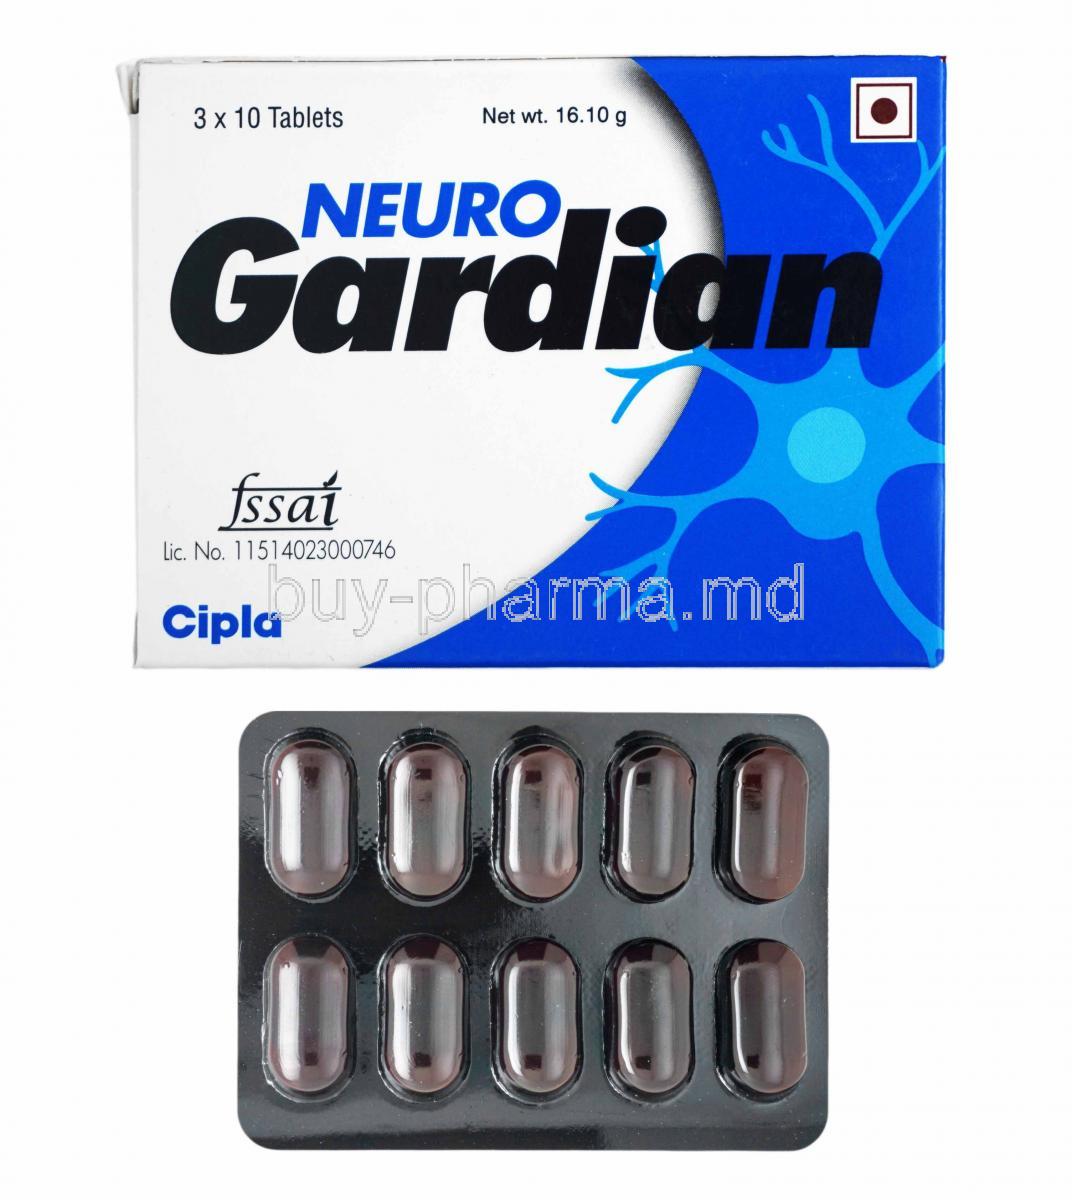 Neuro Gardian, box and tablets